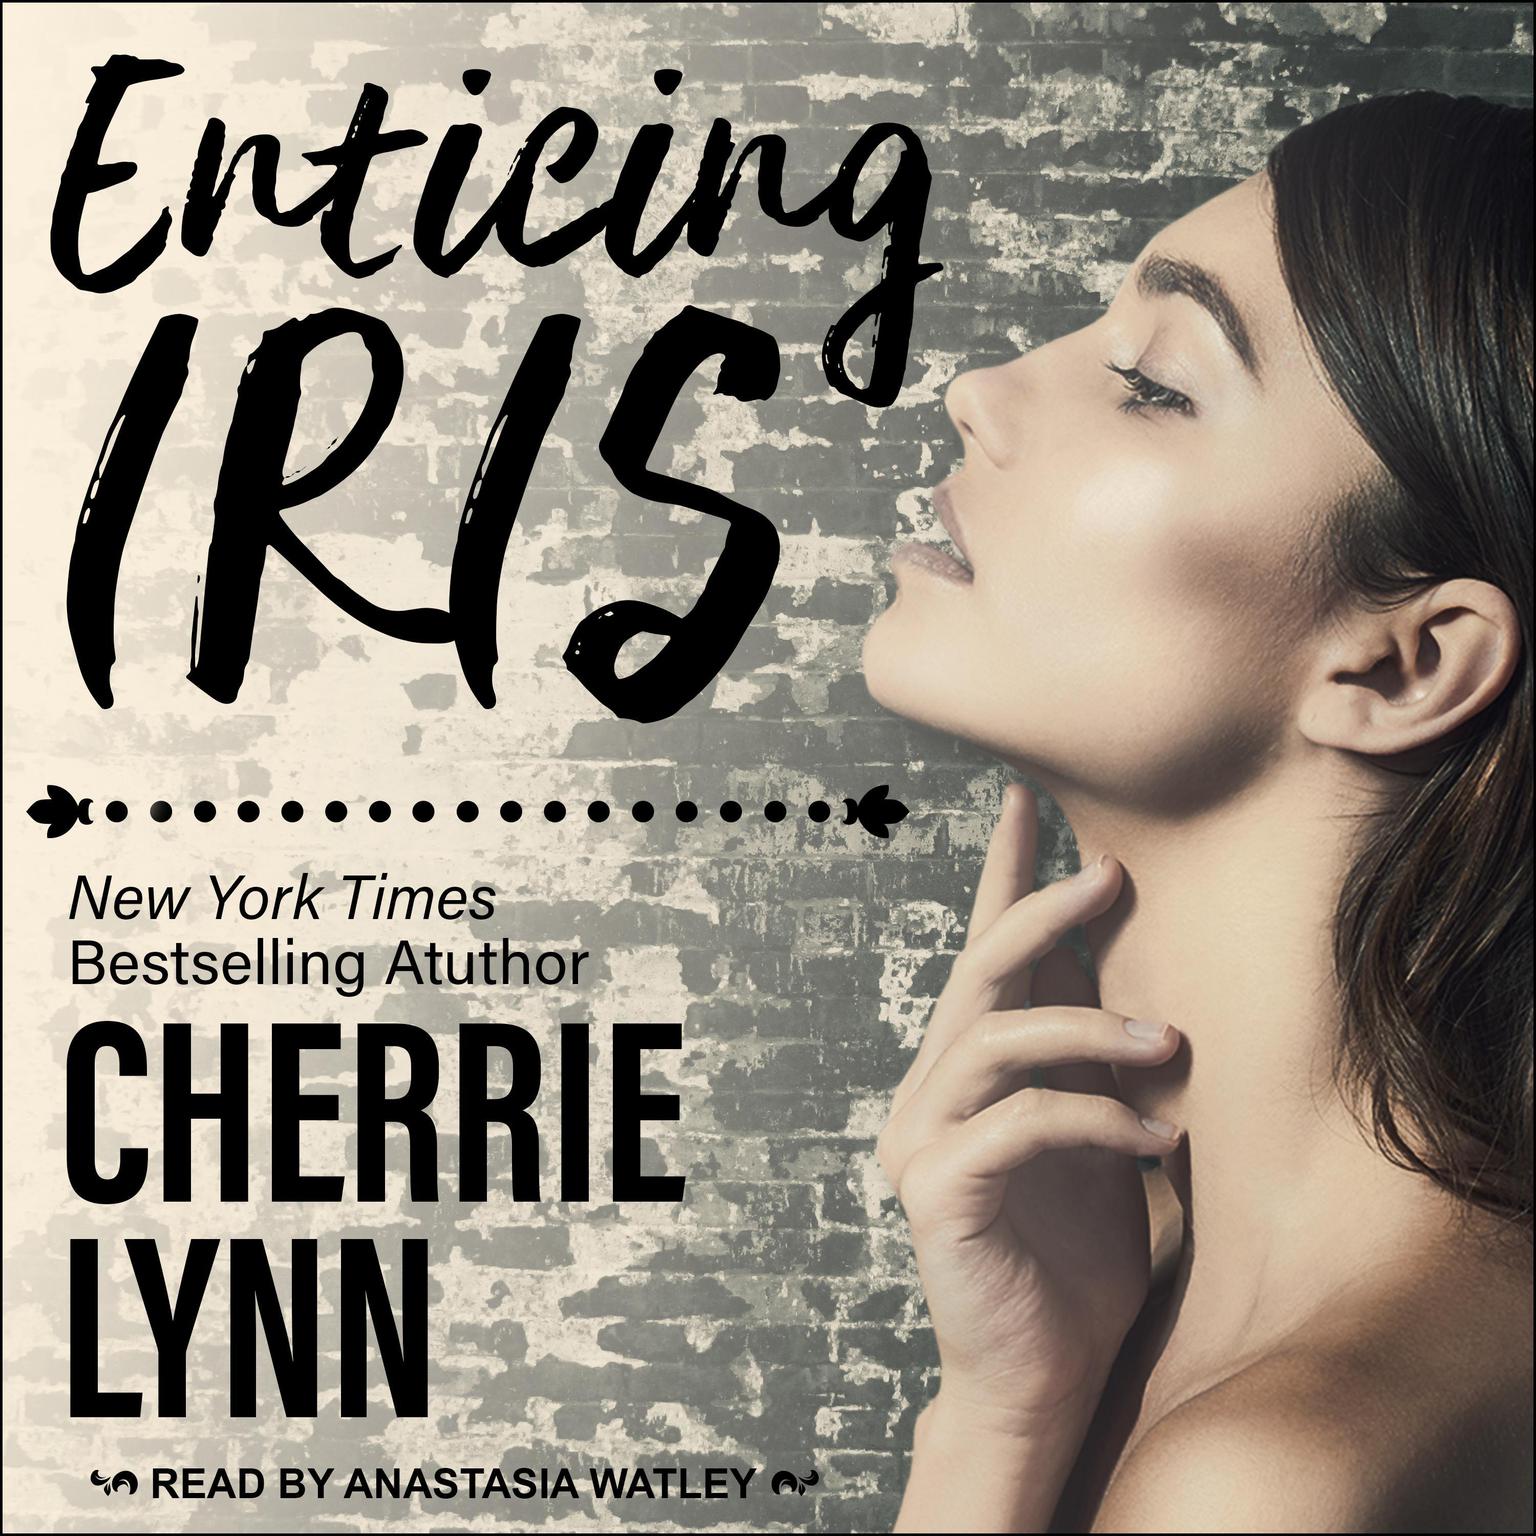 Enticing Iris Audiobook, by Cherrie Lynn